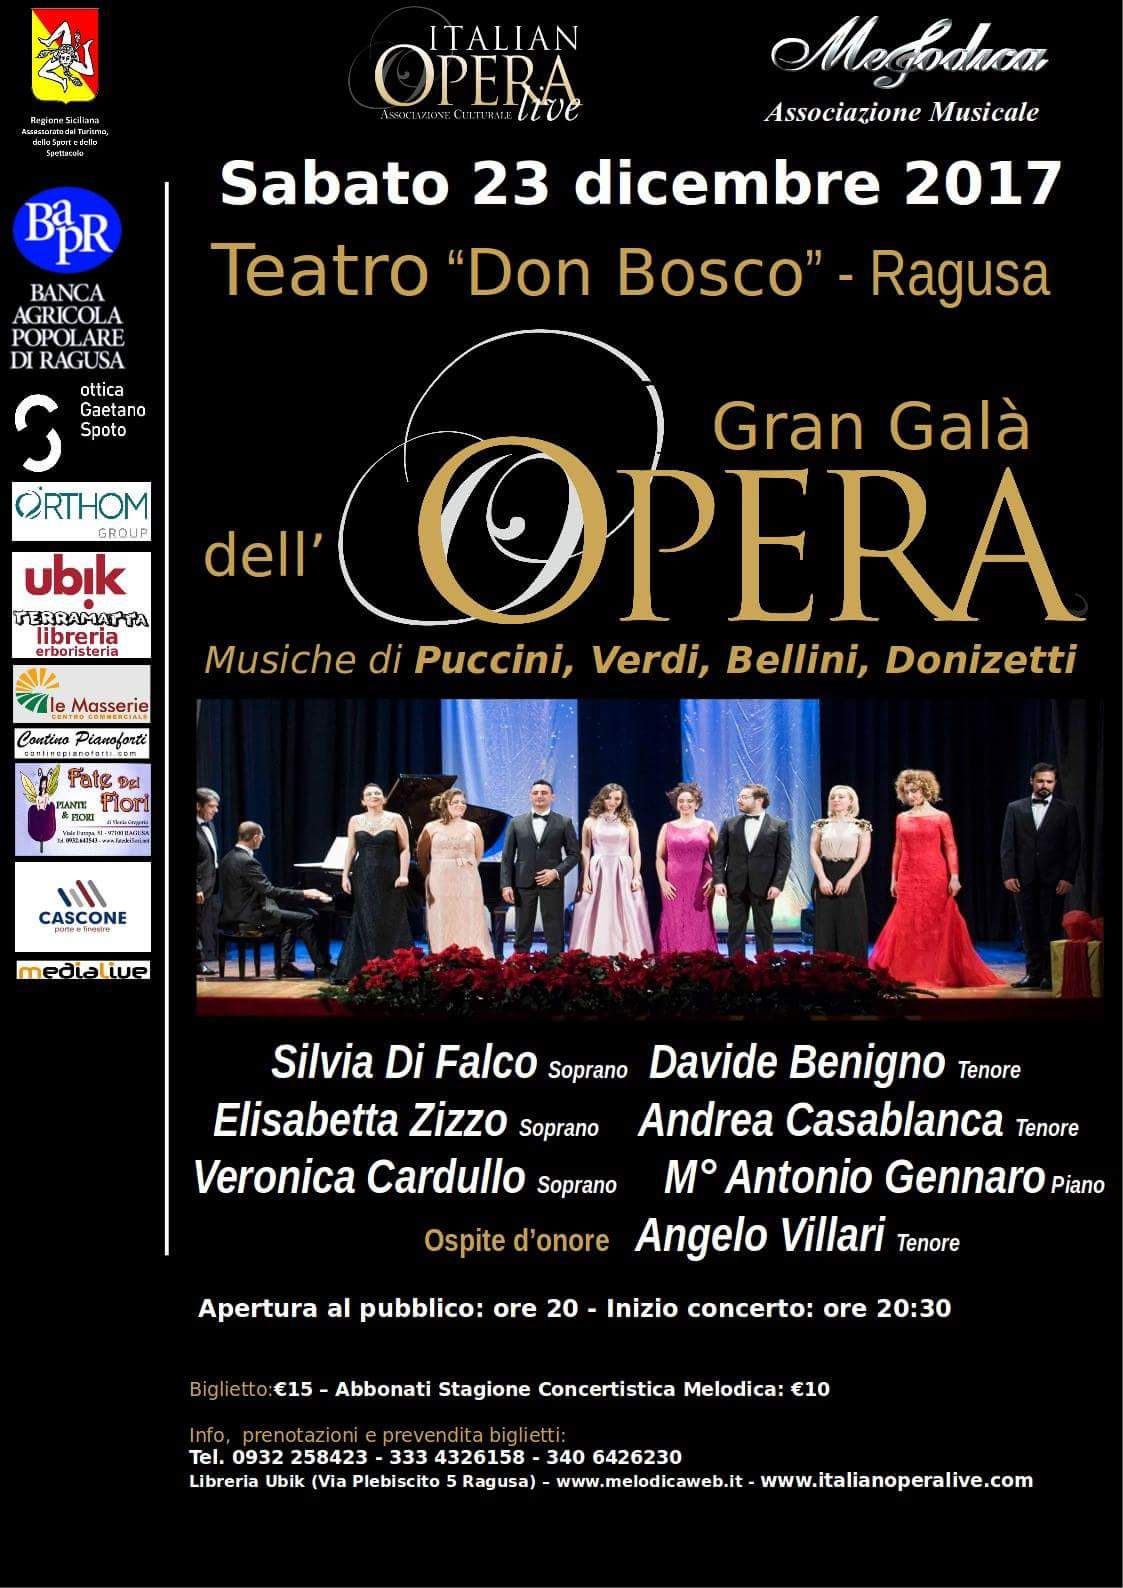 Gran Galà dell'Opera